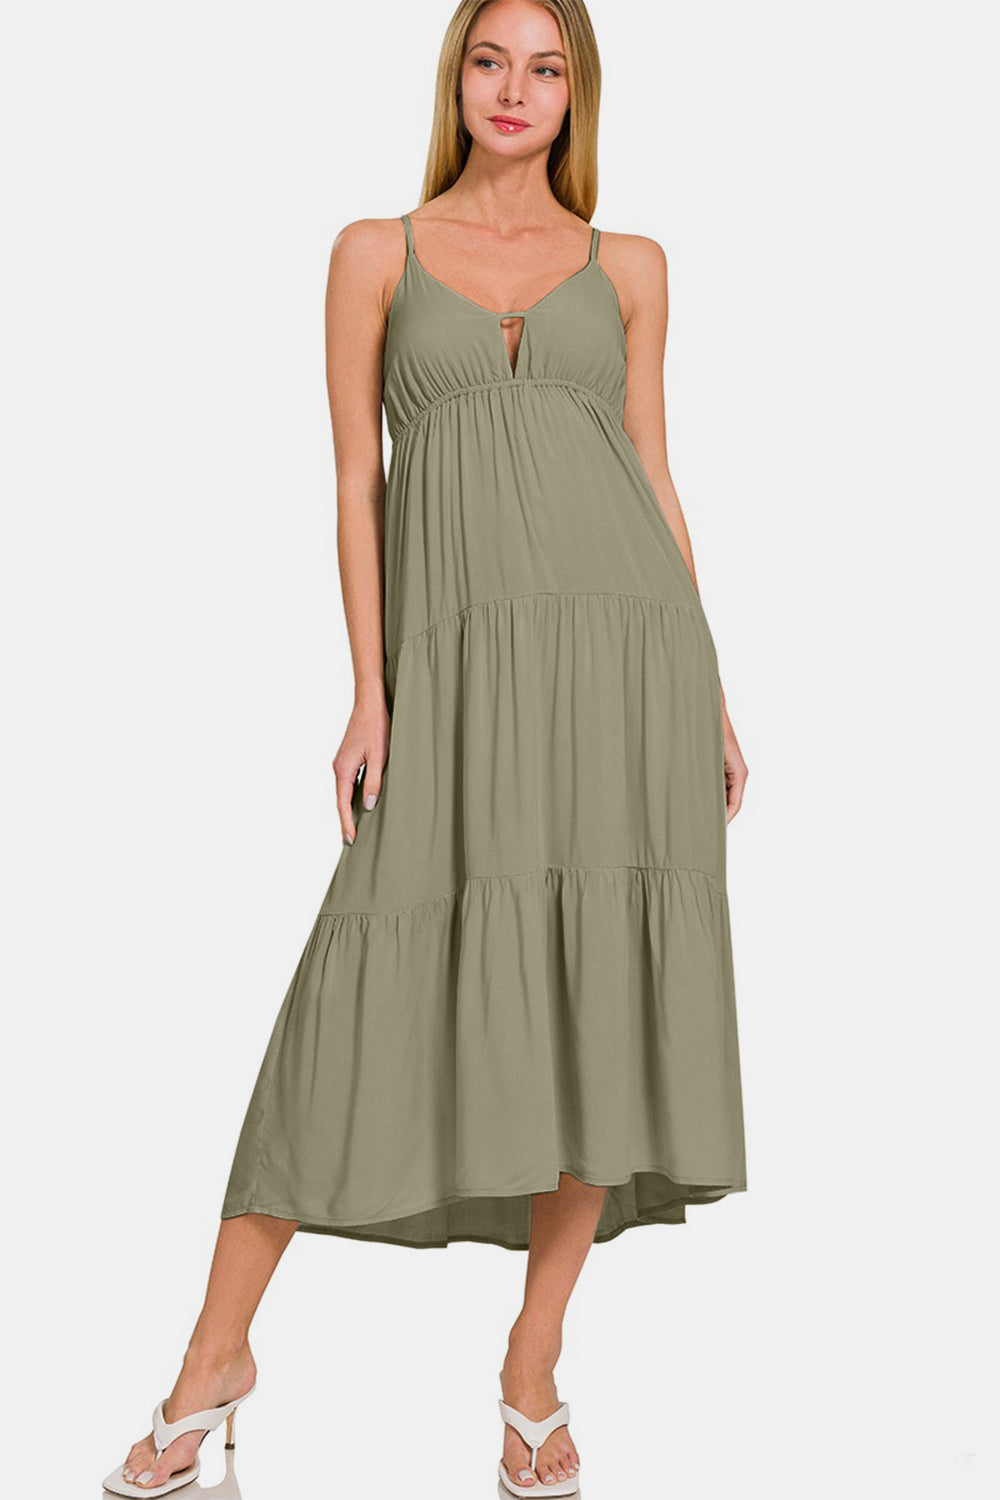 Zenana Woven Olive Green Tiered Cami Midi Dress